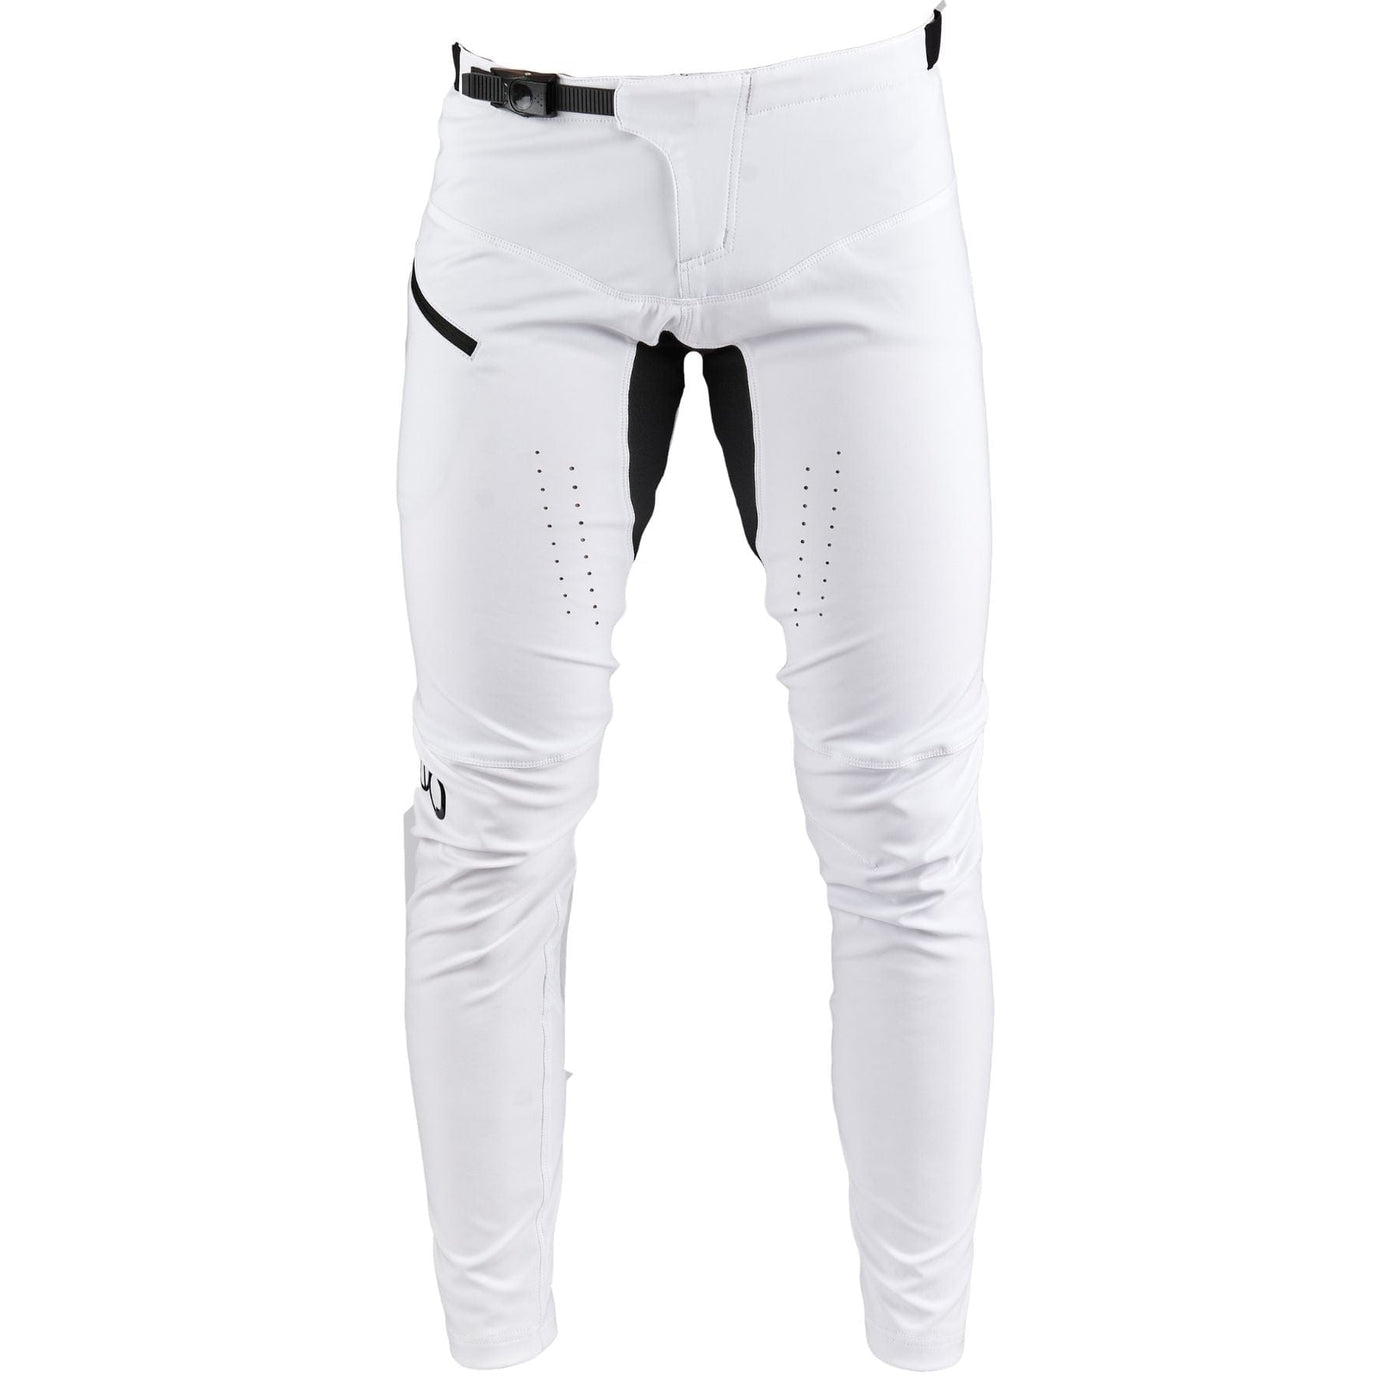 NoLogo Racer Youth BMX Pants - White